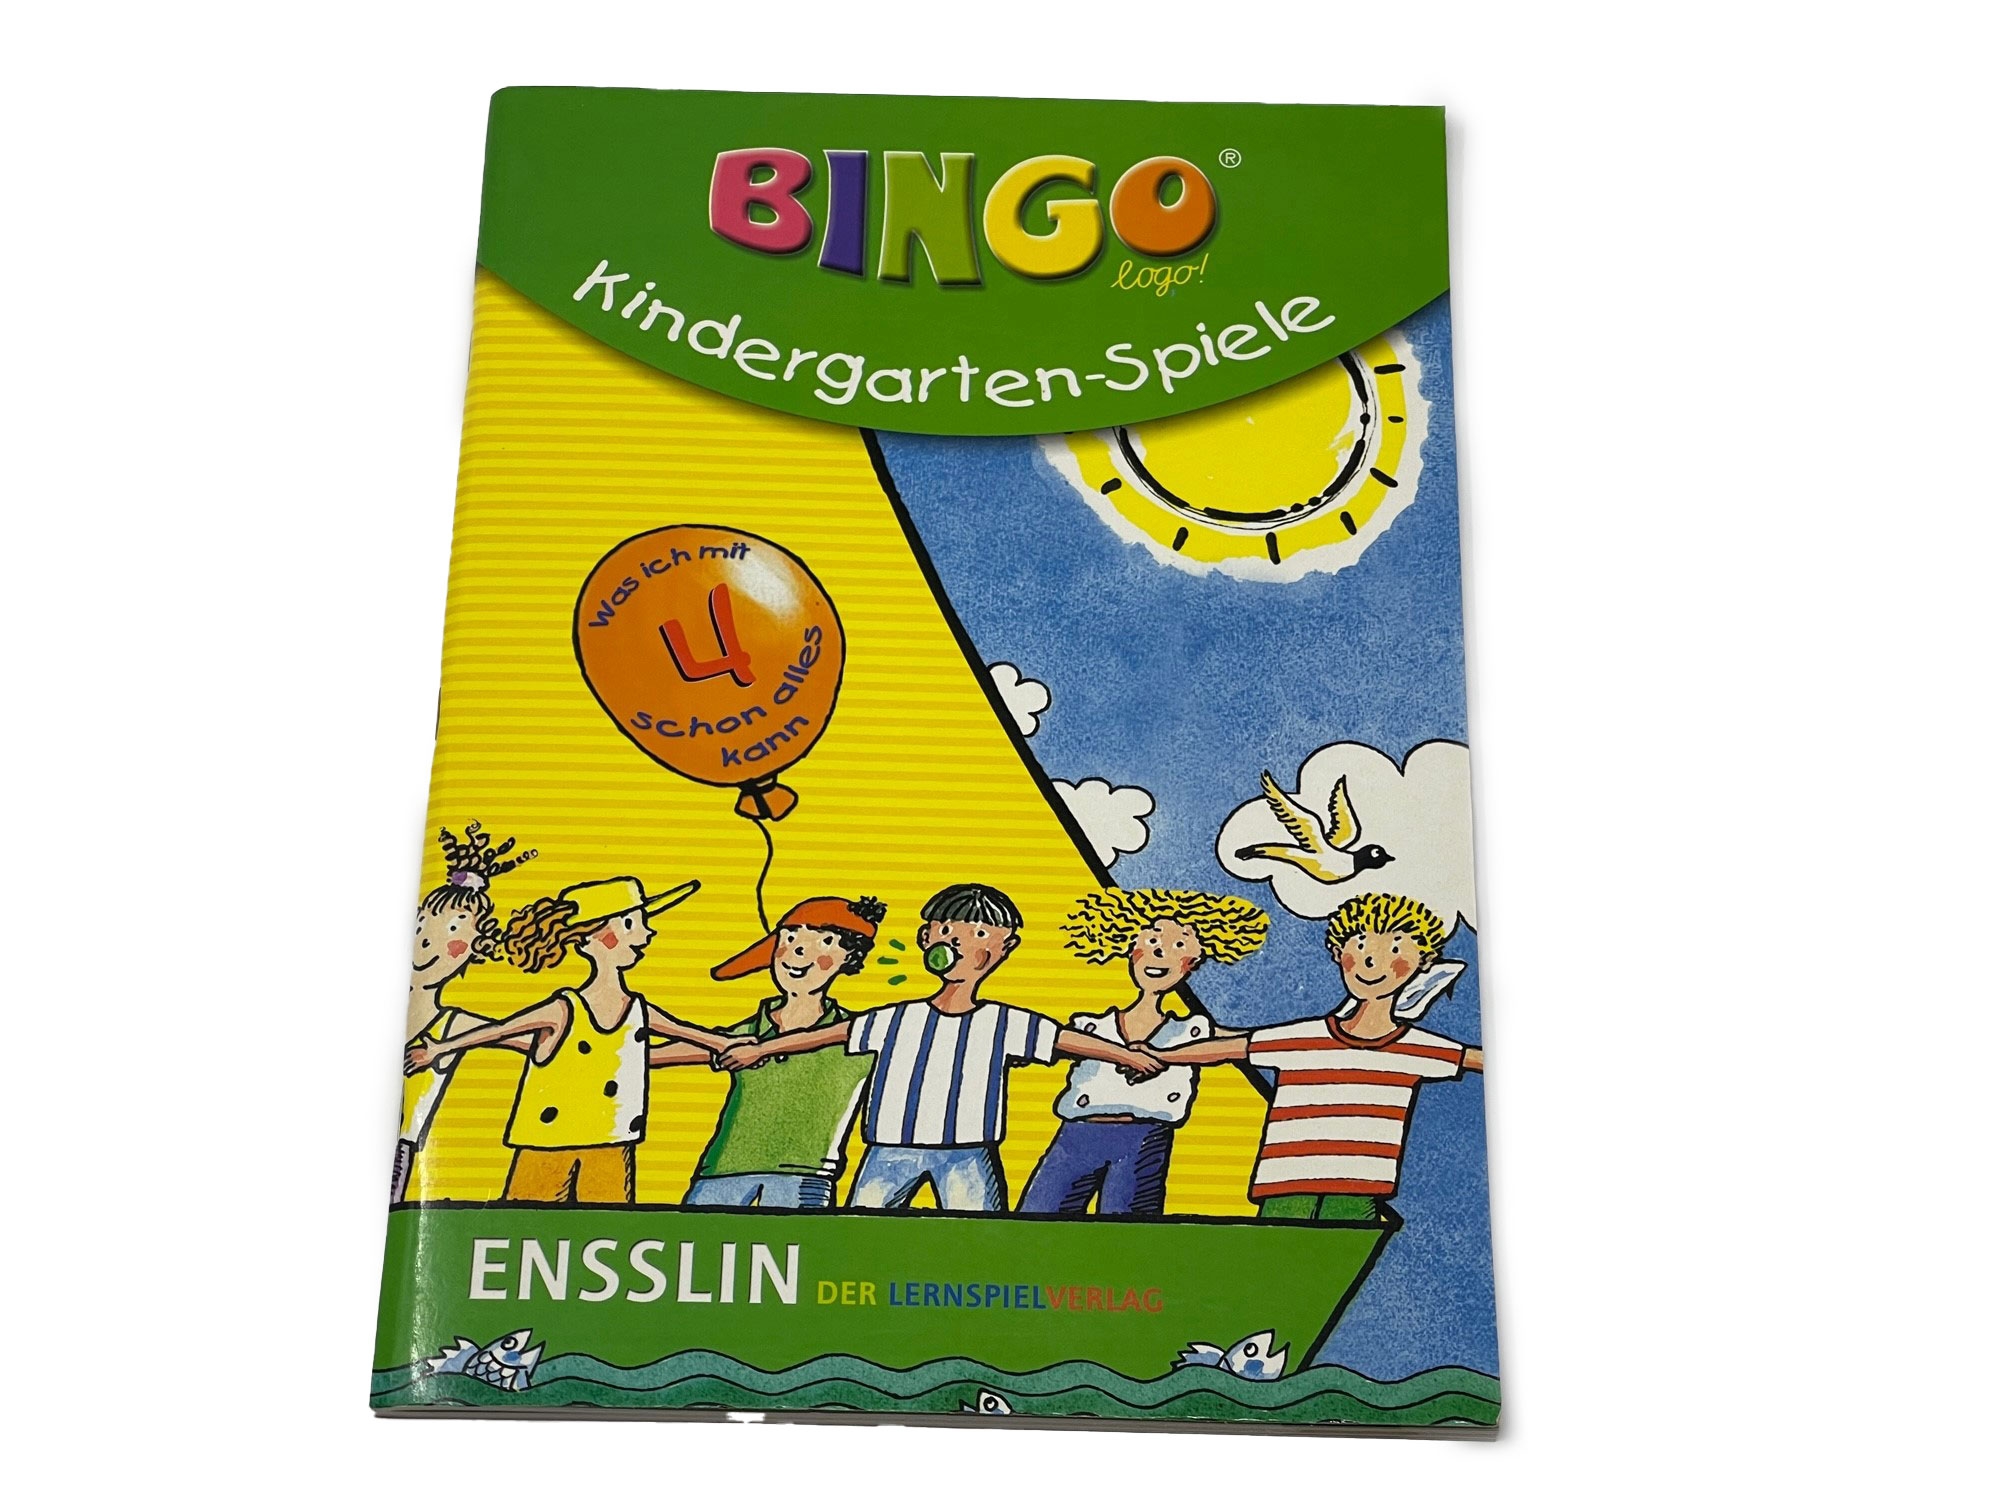 Bingo logo! Kindergarten-Spiele